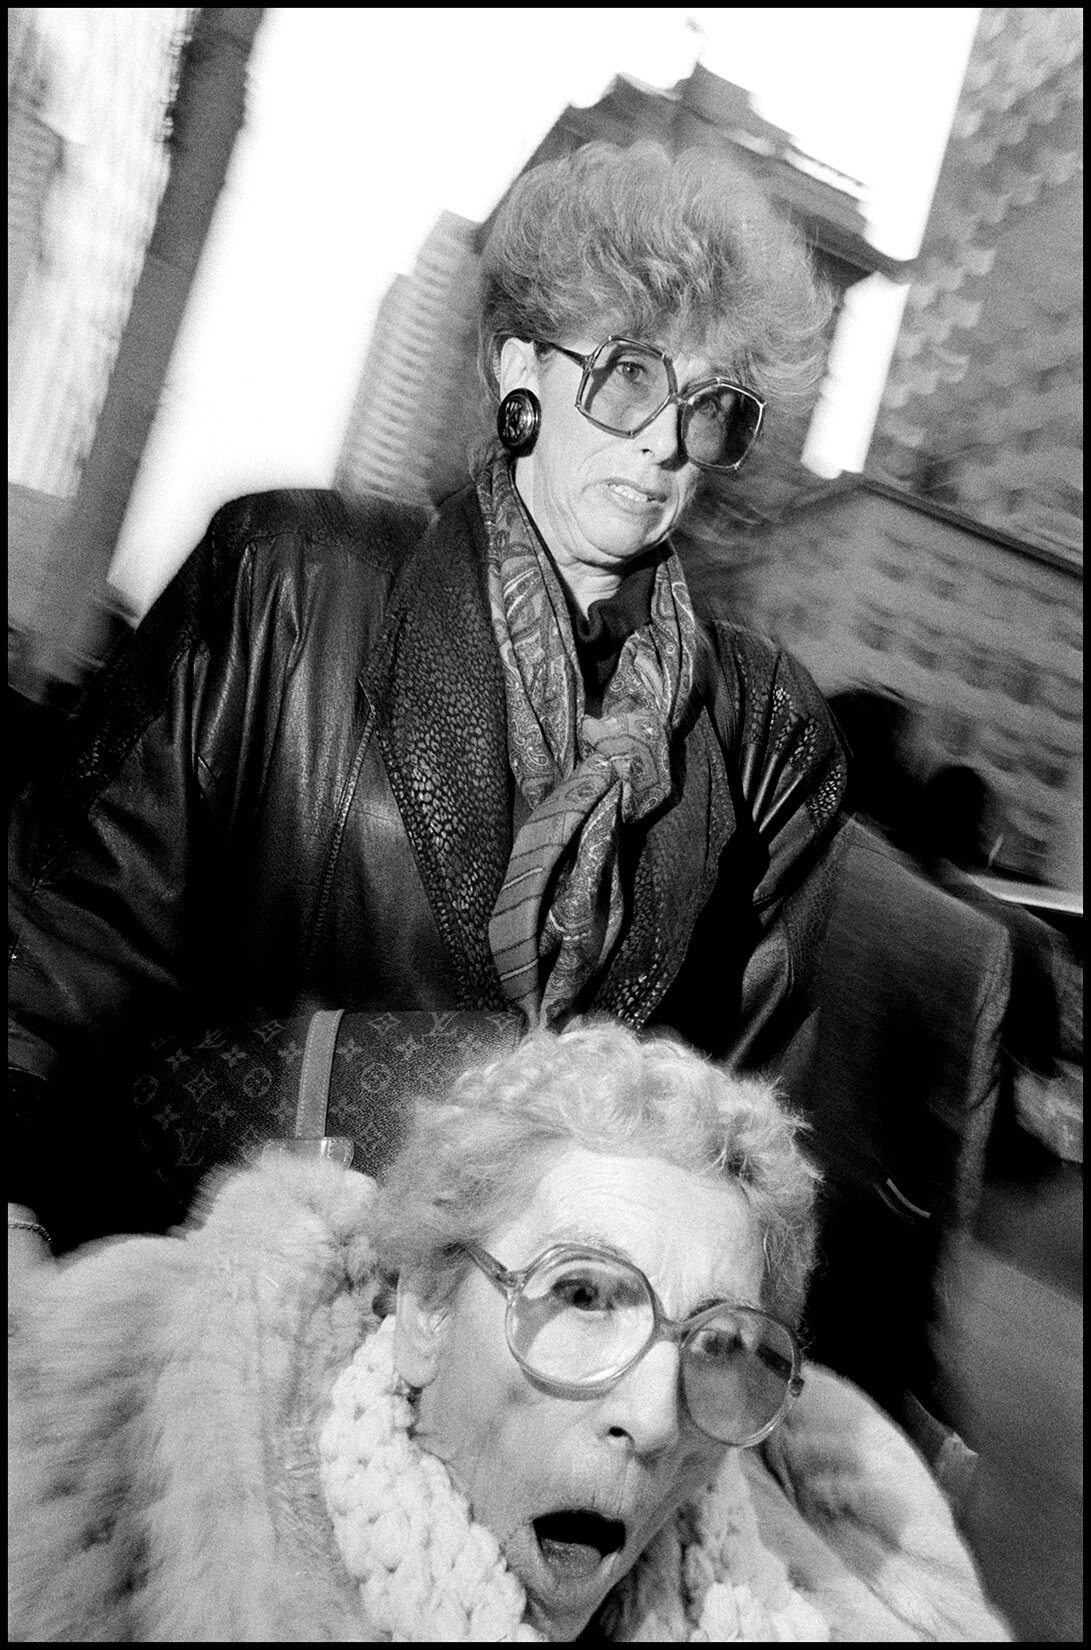  BRUCE GILDEN/MAGNUM PHOTOS New York City, USA. 1990. 